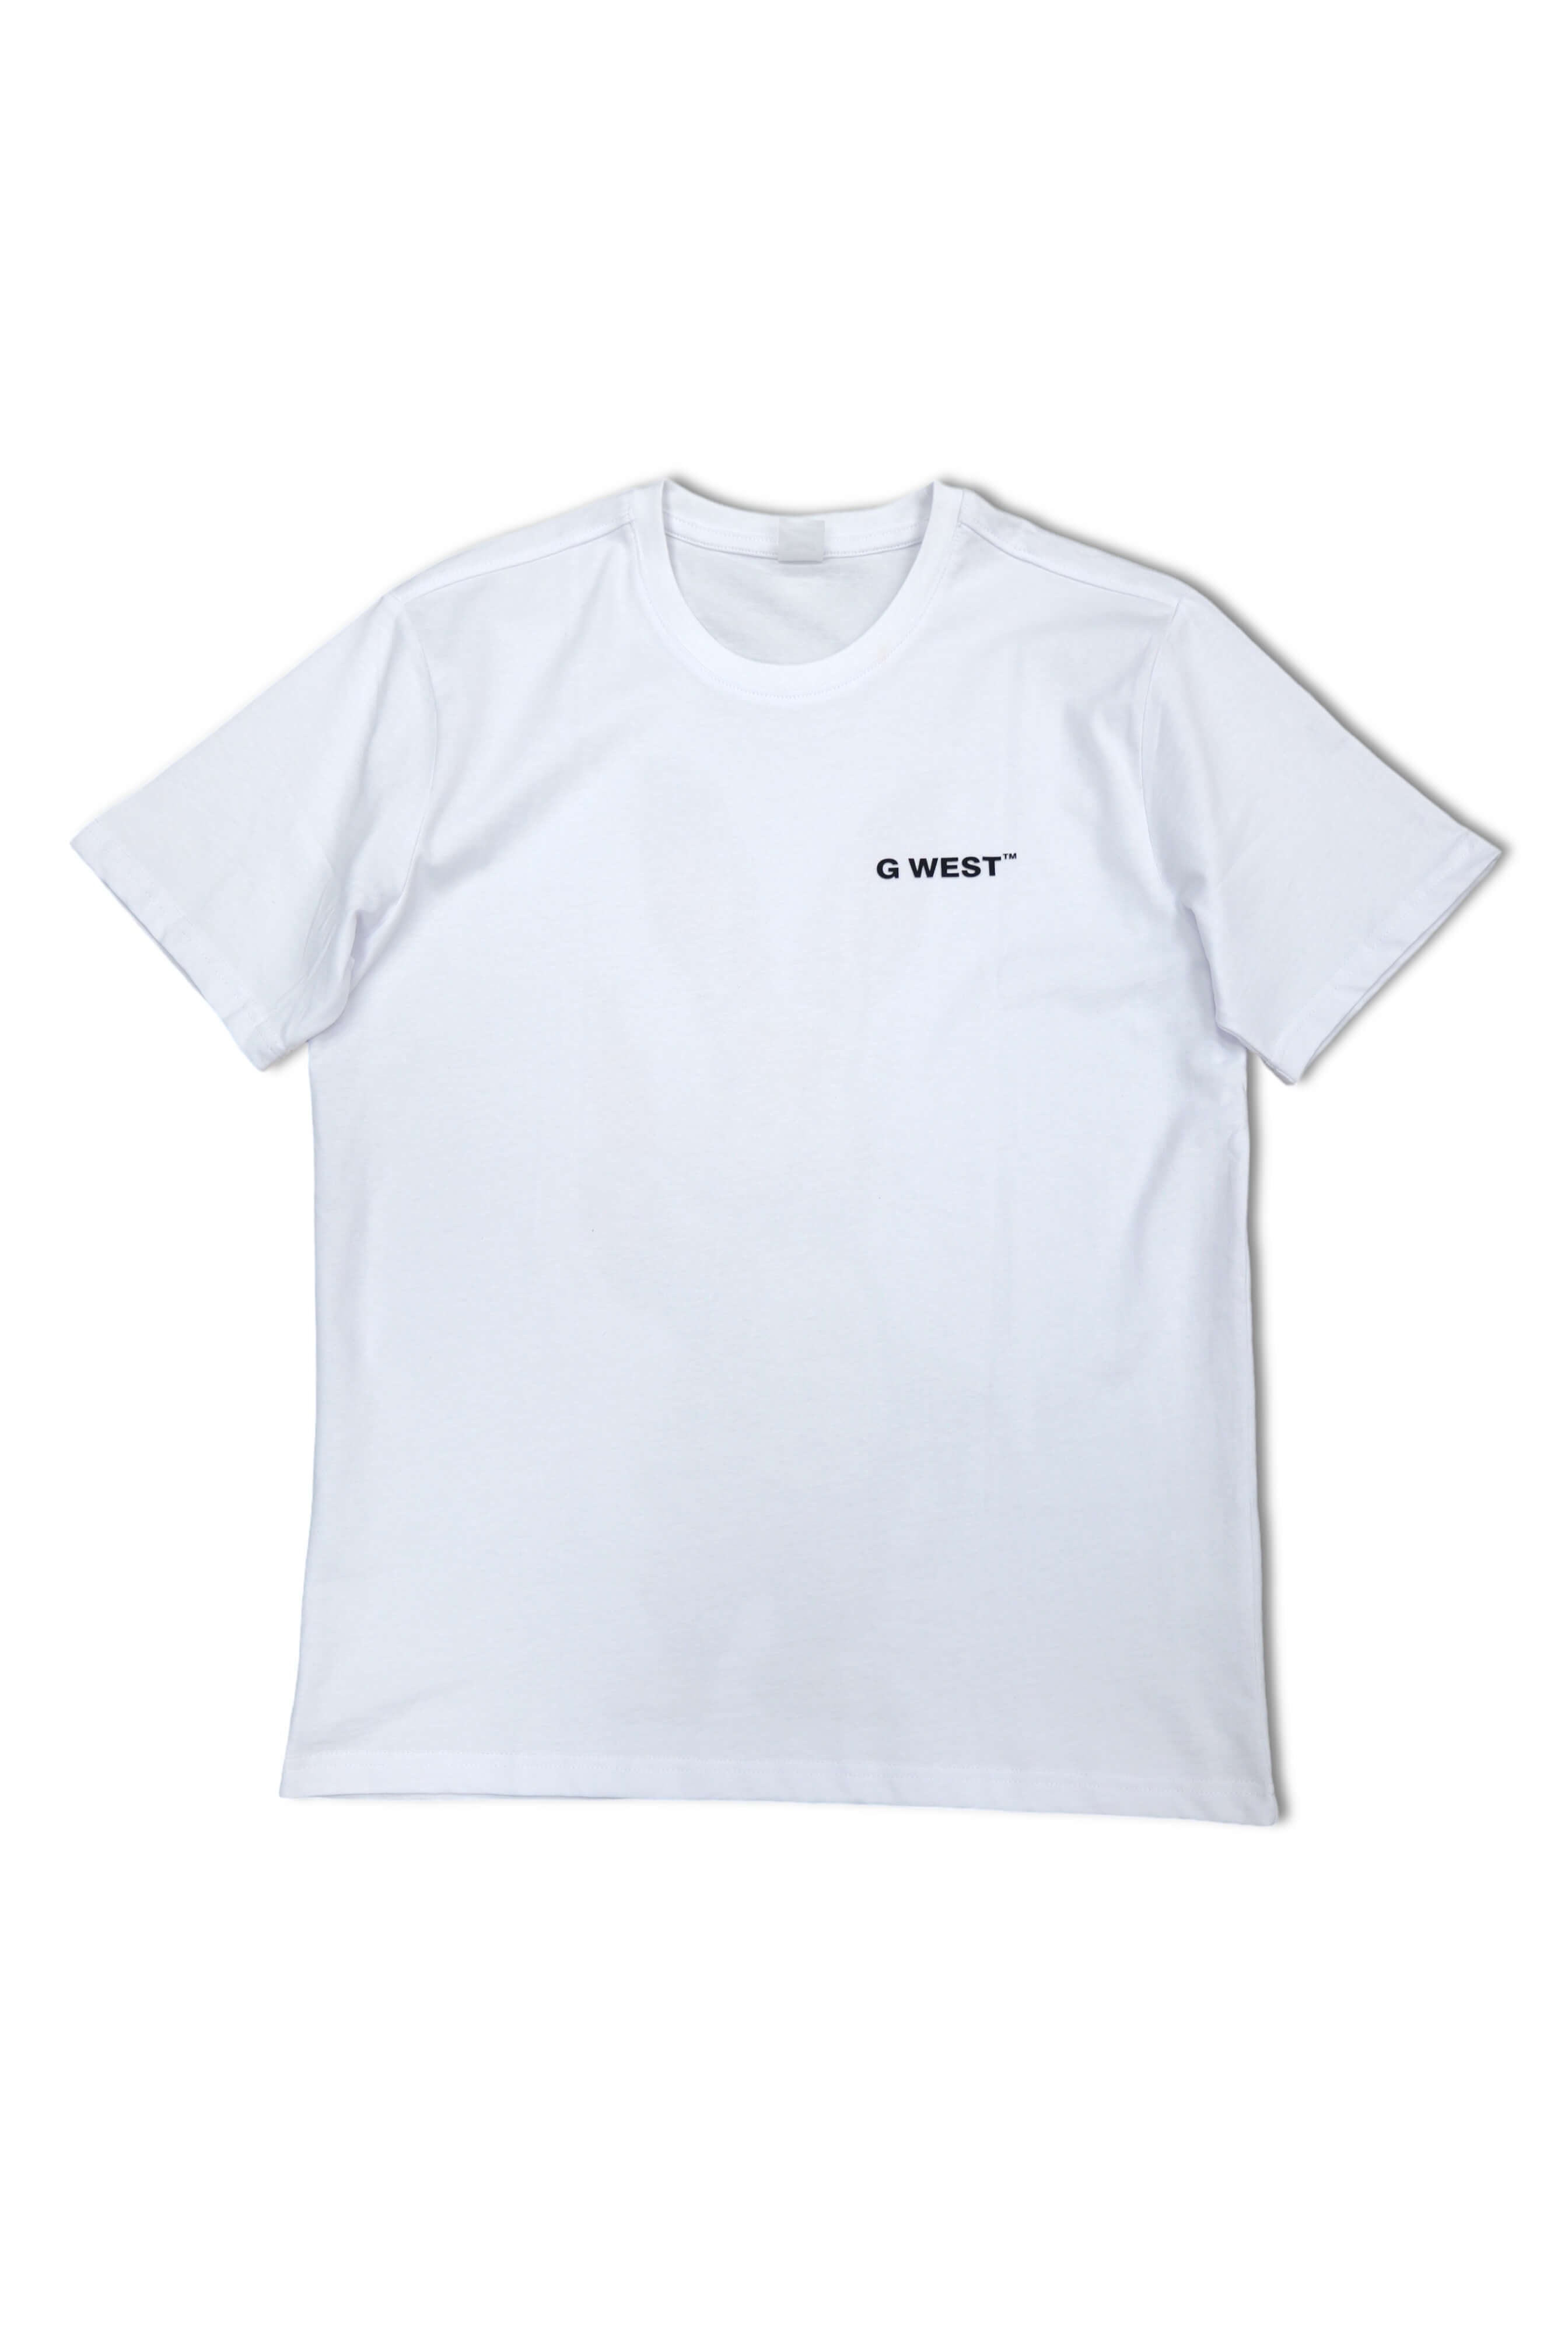 G West Bad Bunny T-shirt - White